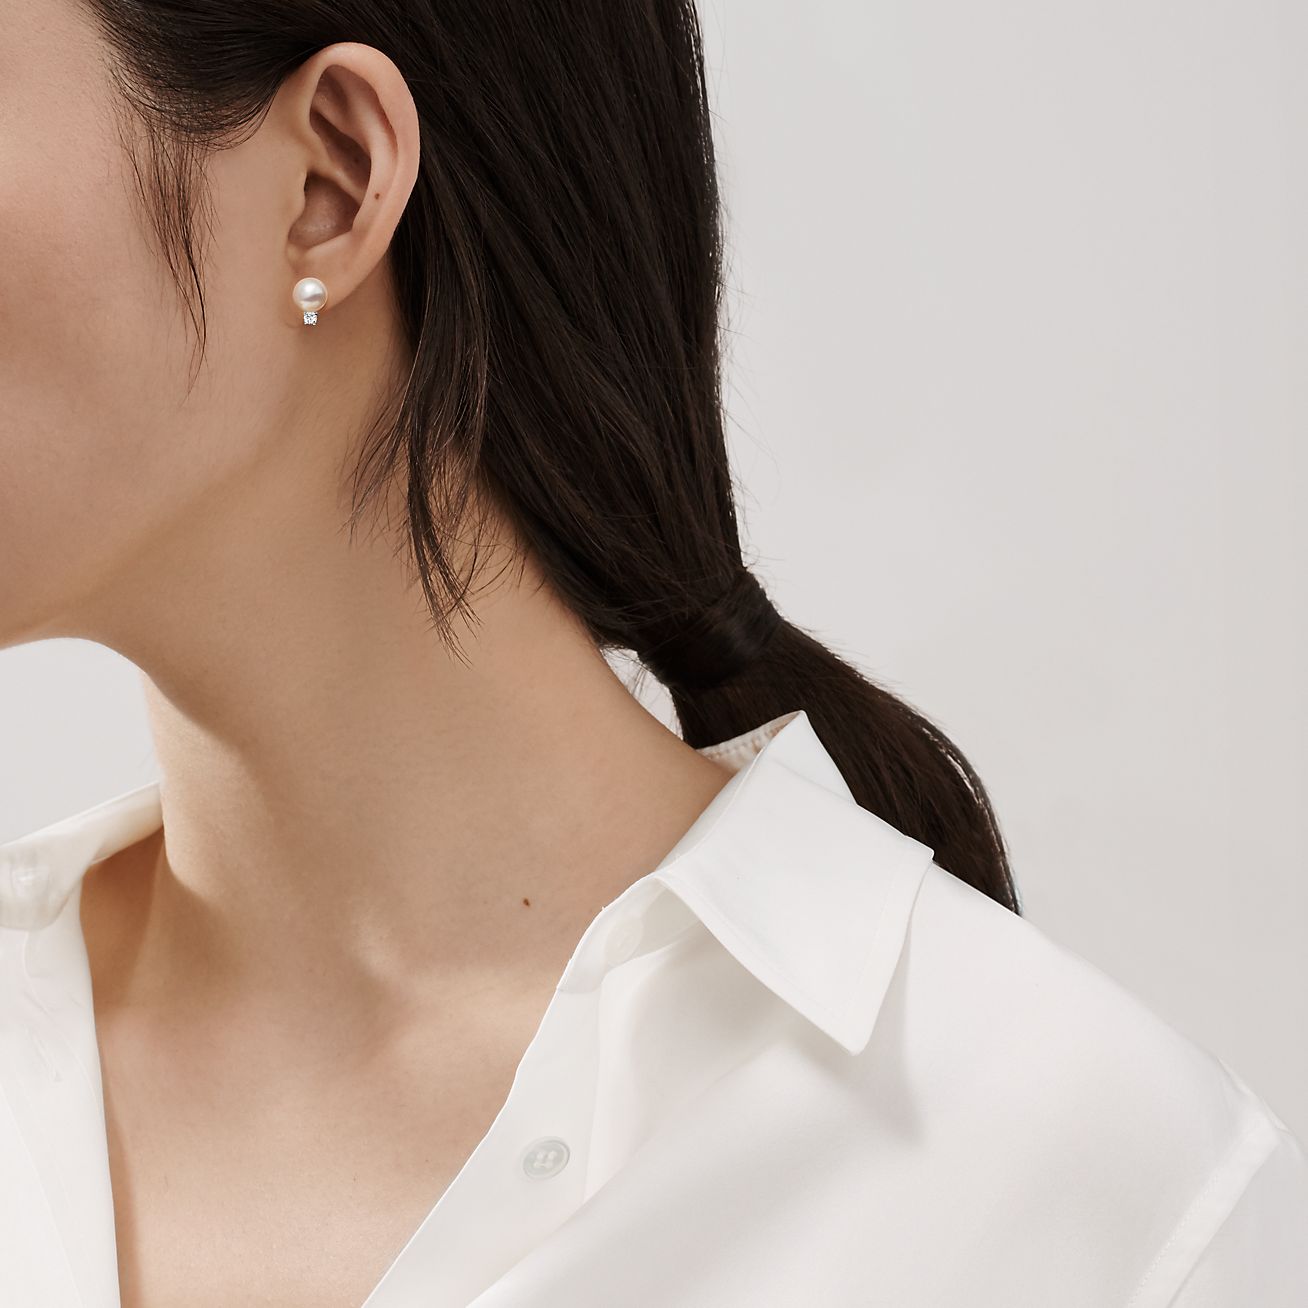 Tiffany Soleste earrings in platinum with round brilliant diamonds   Tiffany  Co